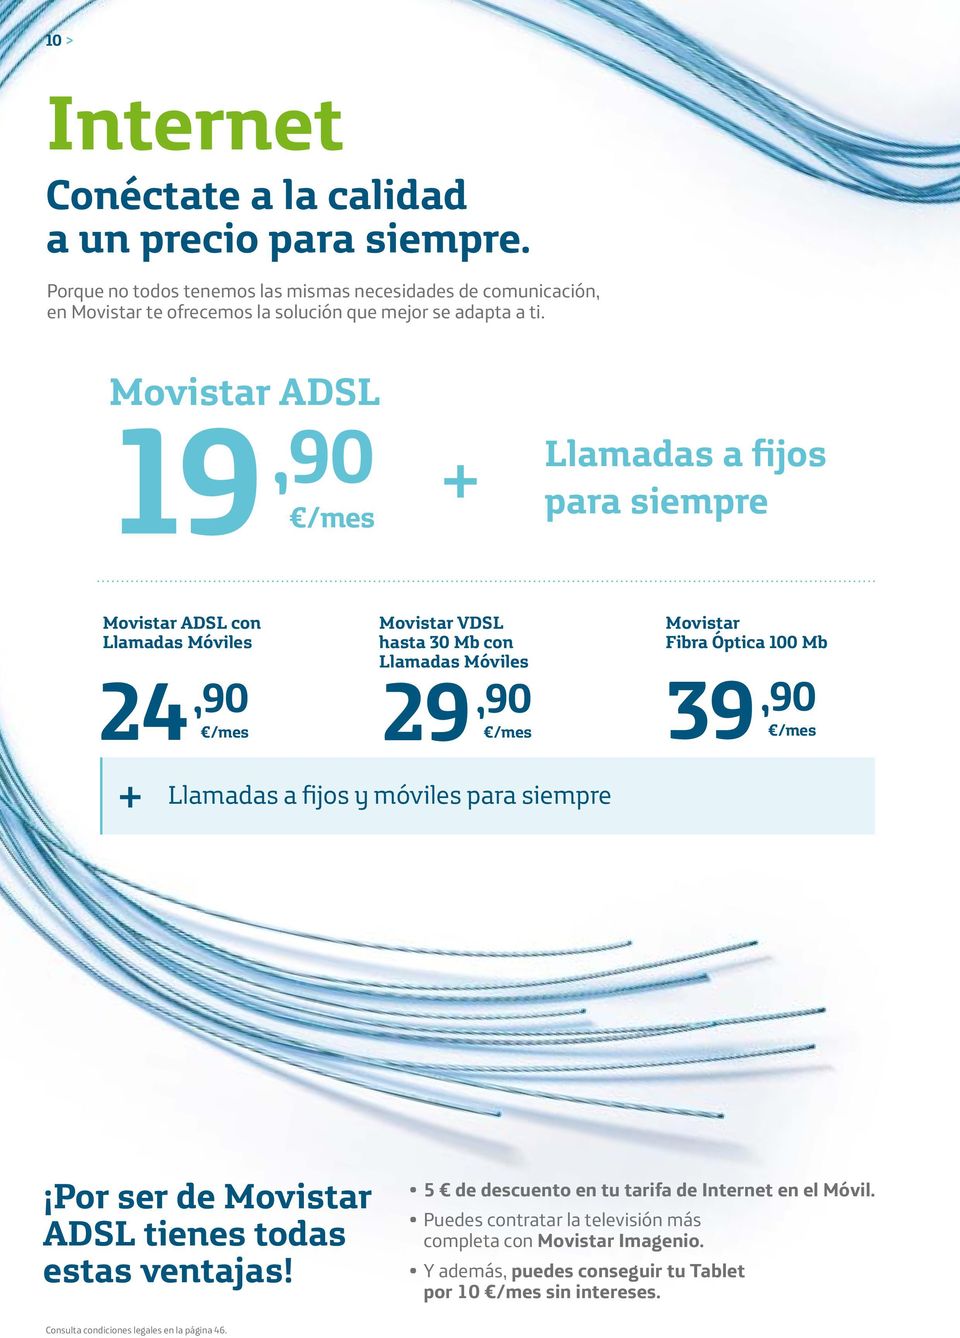 Movistar ADSL 19,90 /mes + Llamadas a fijos para siempre Movistar ADSL con Llamadas Móviles 24,90 /mes 29 + Movistar VDSL hasta 30 Mb con Llamadas Móviles,90 /mes 39